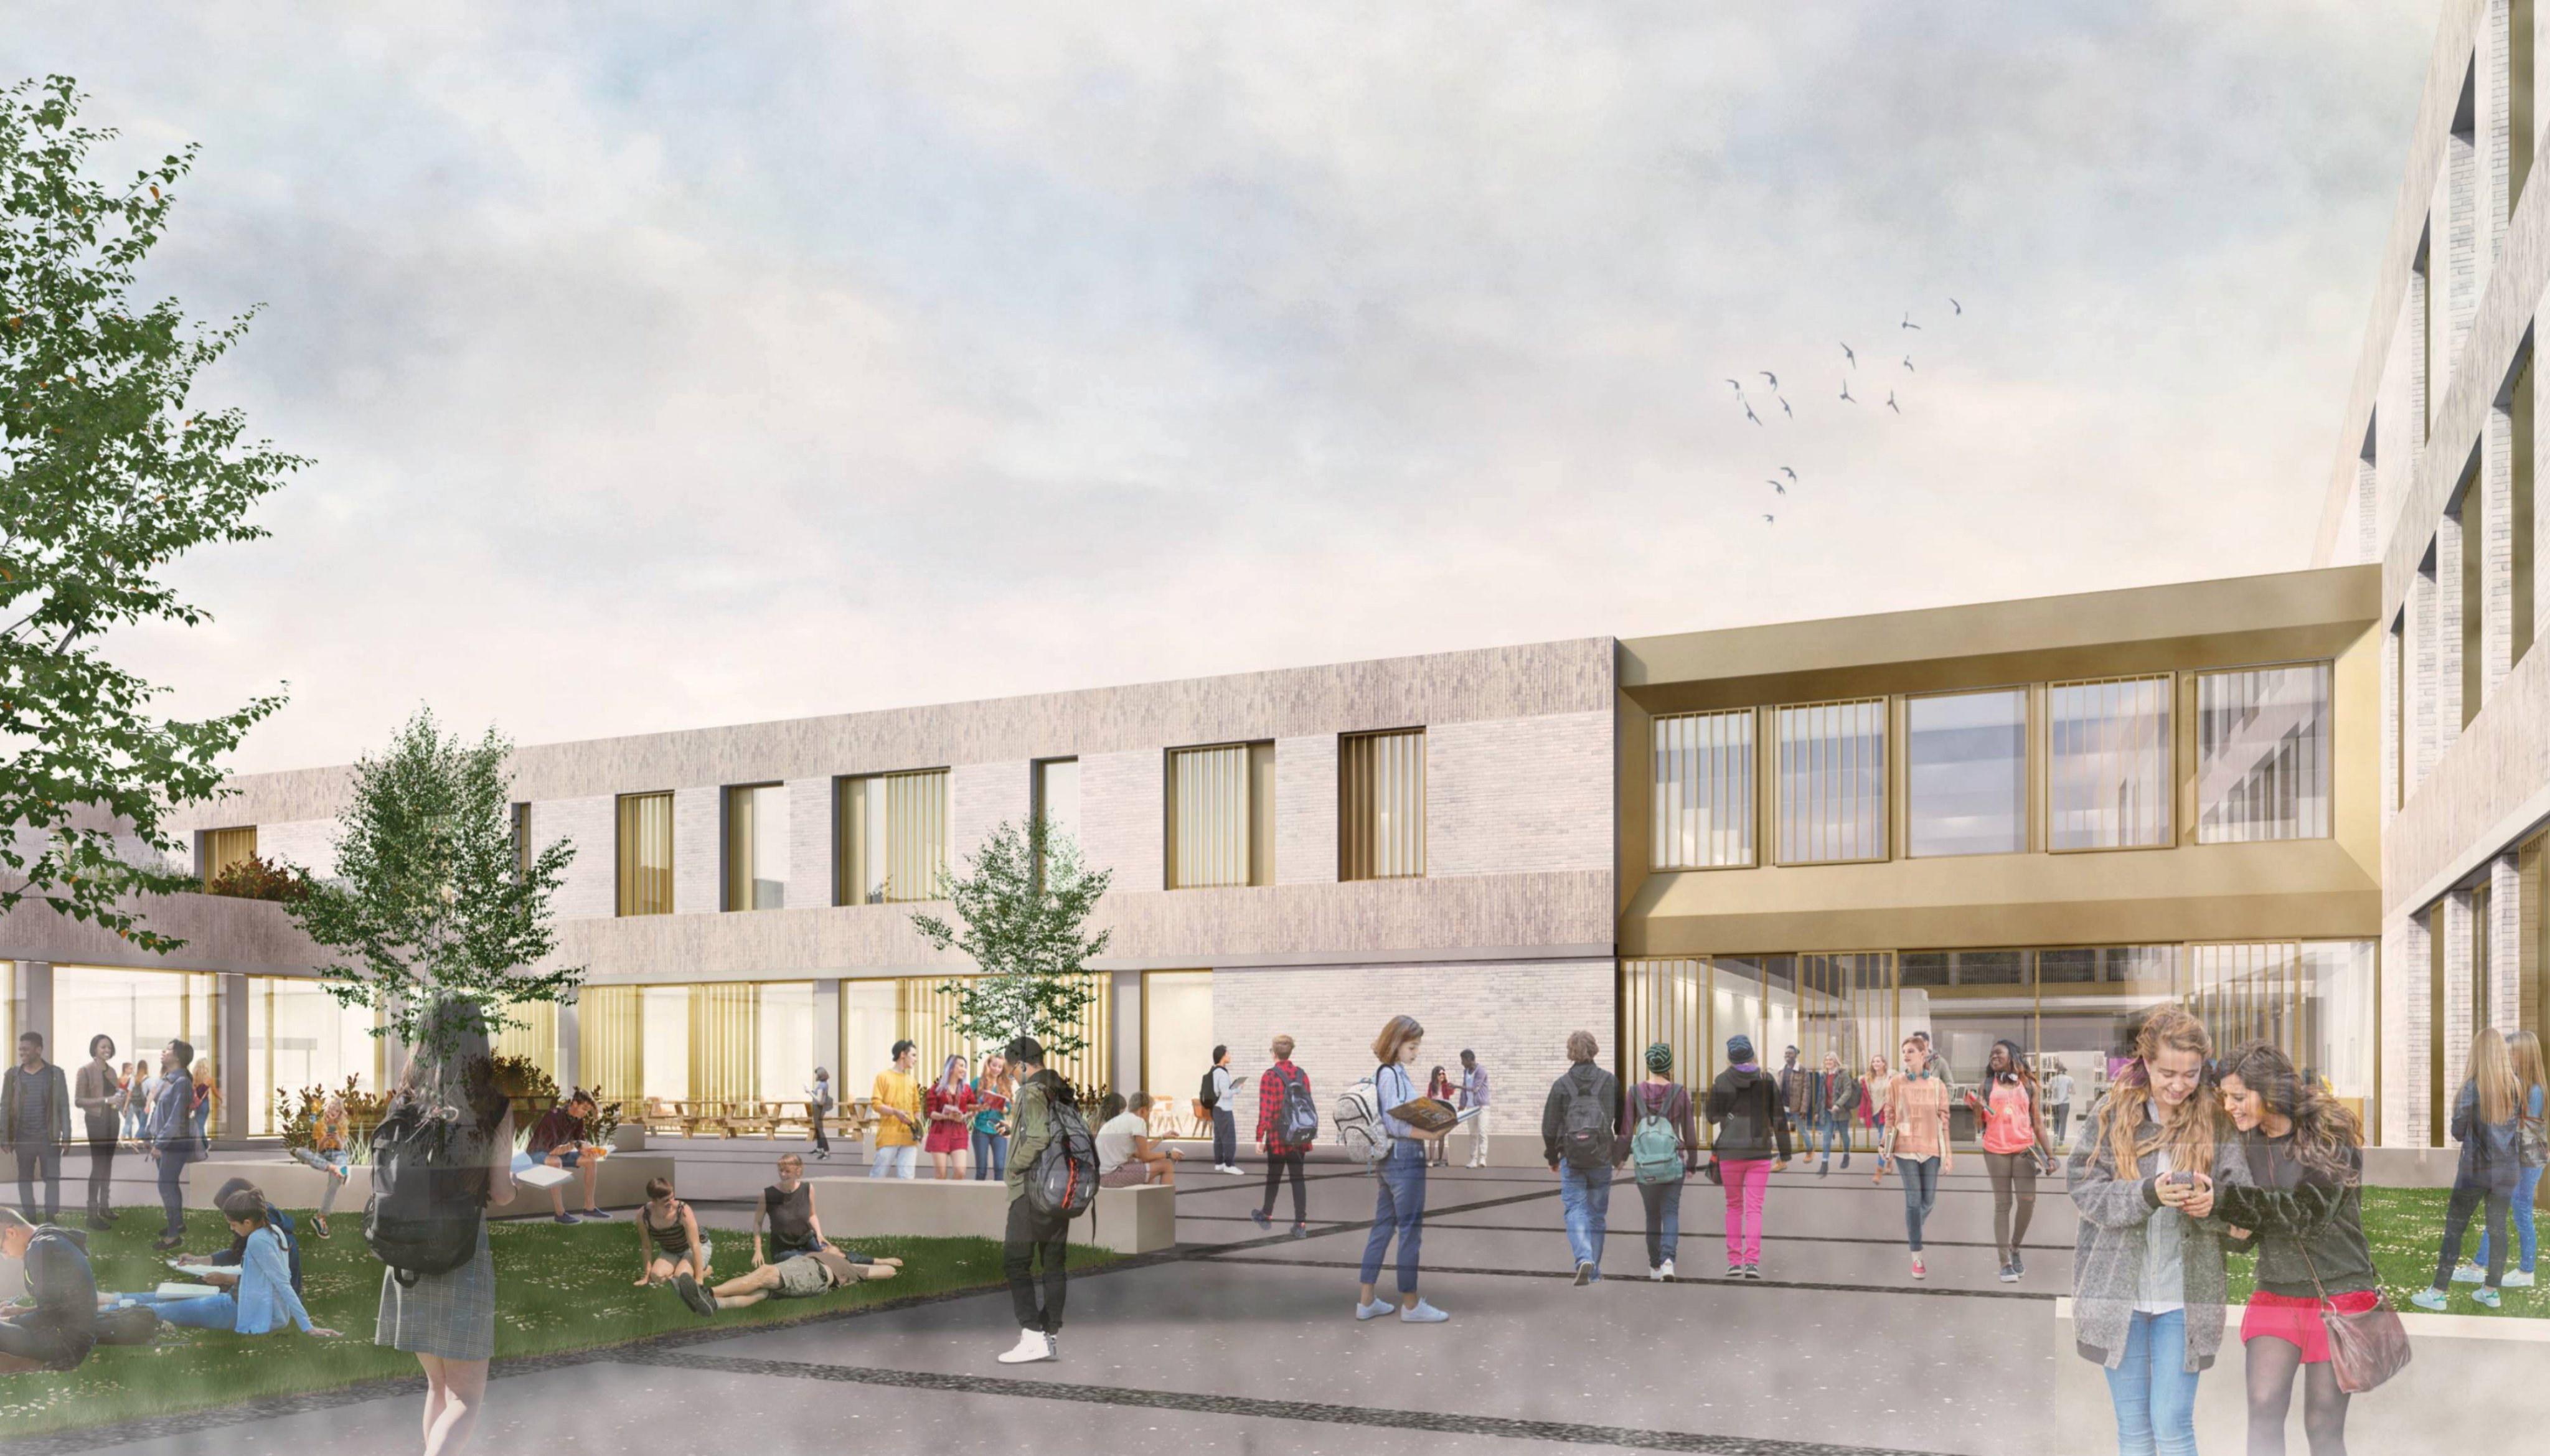 Proposed Dundee campus unveiled at public consultation